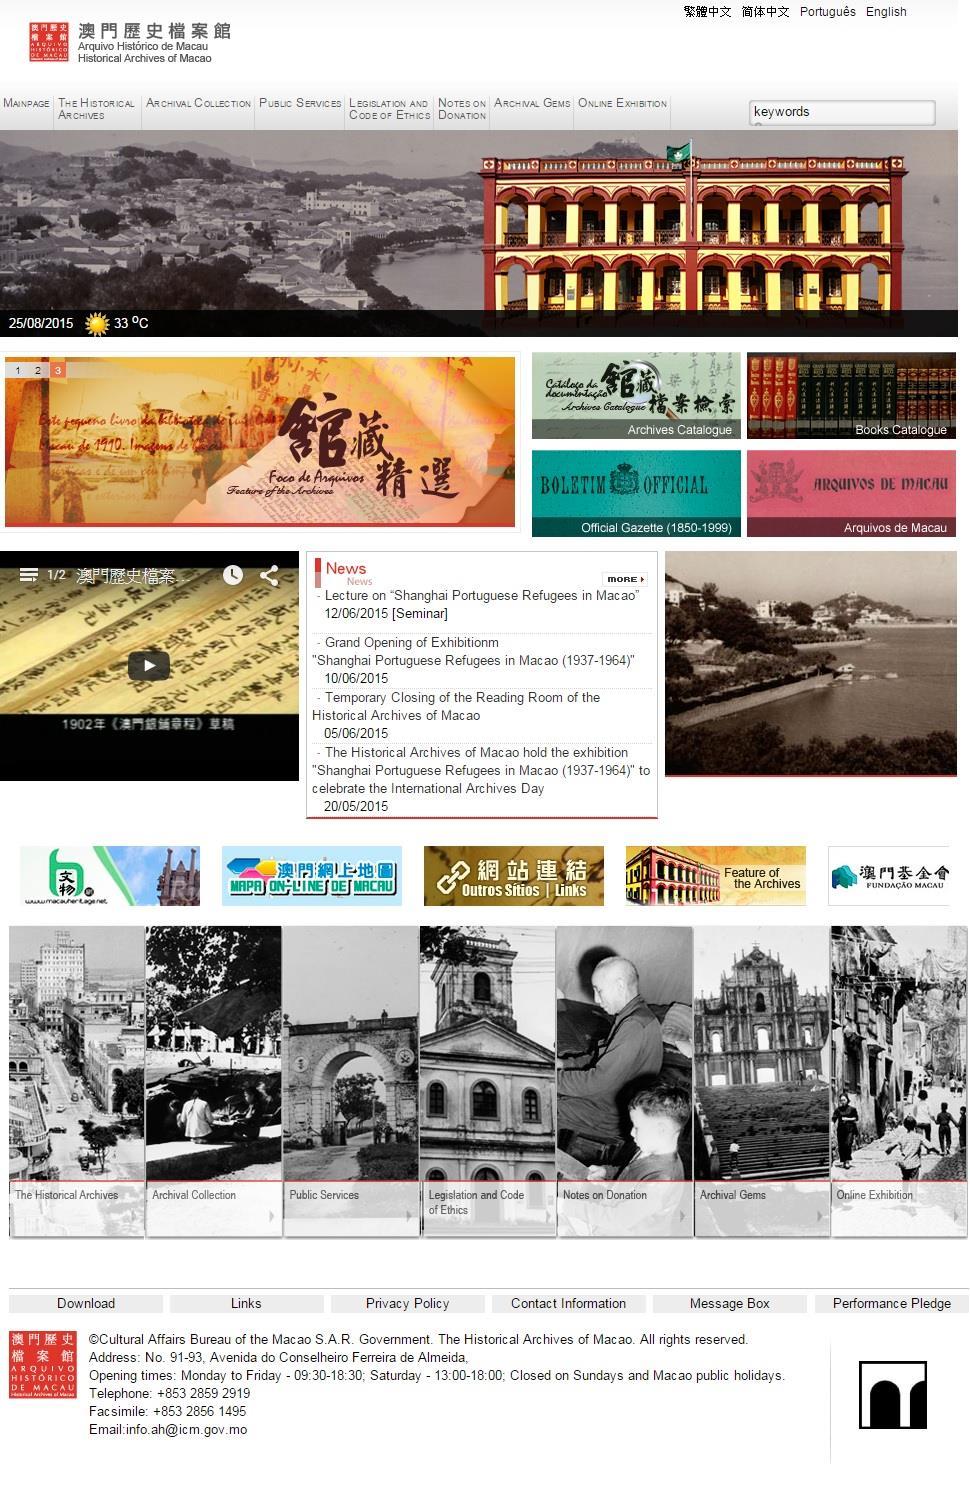 (Diagram 3) Homepage of the website